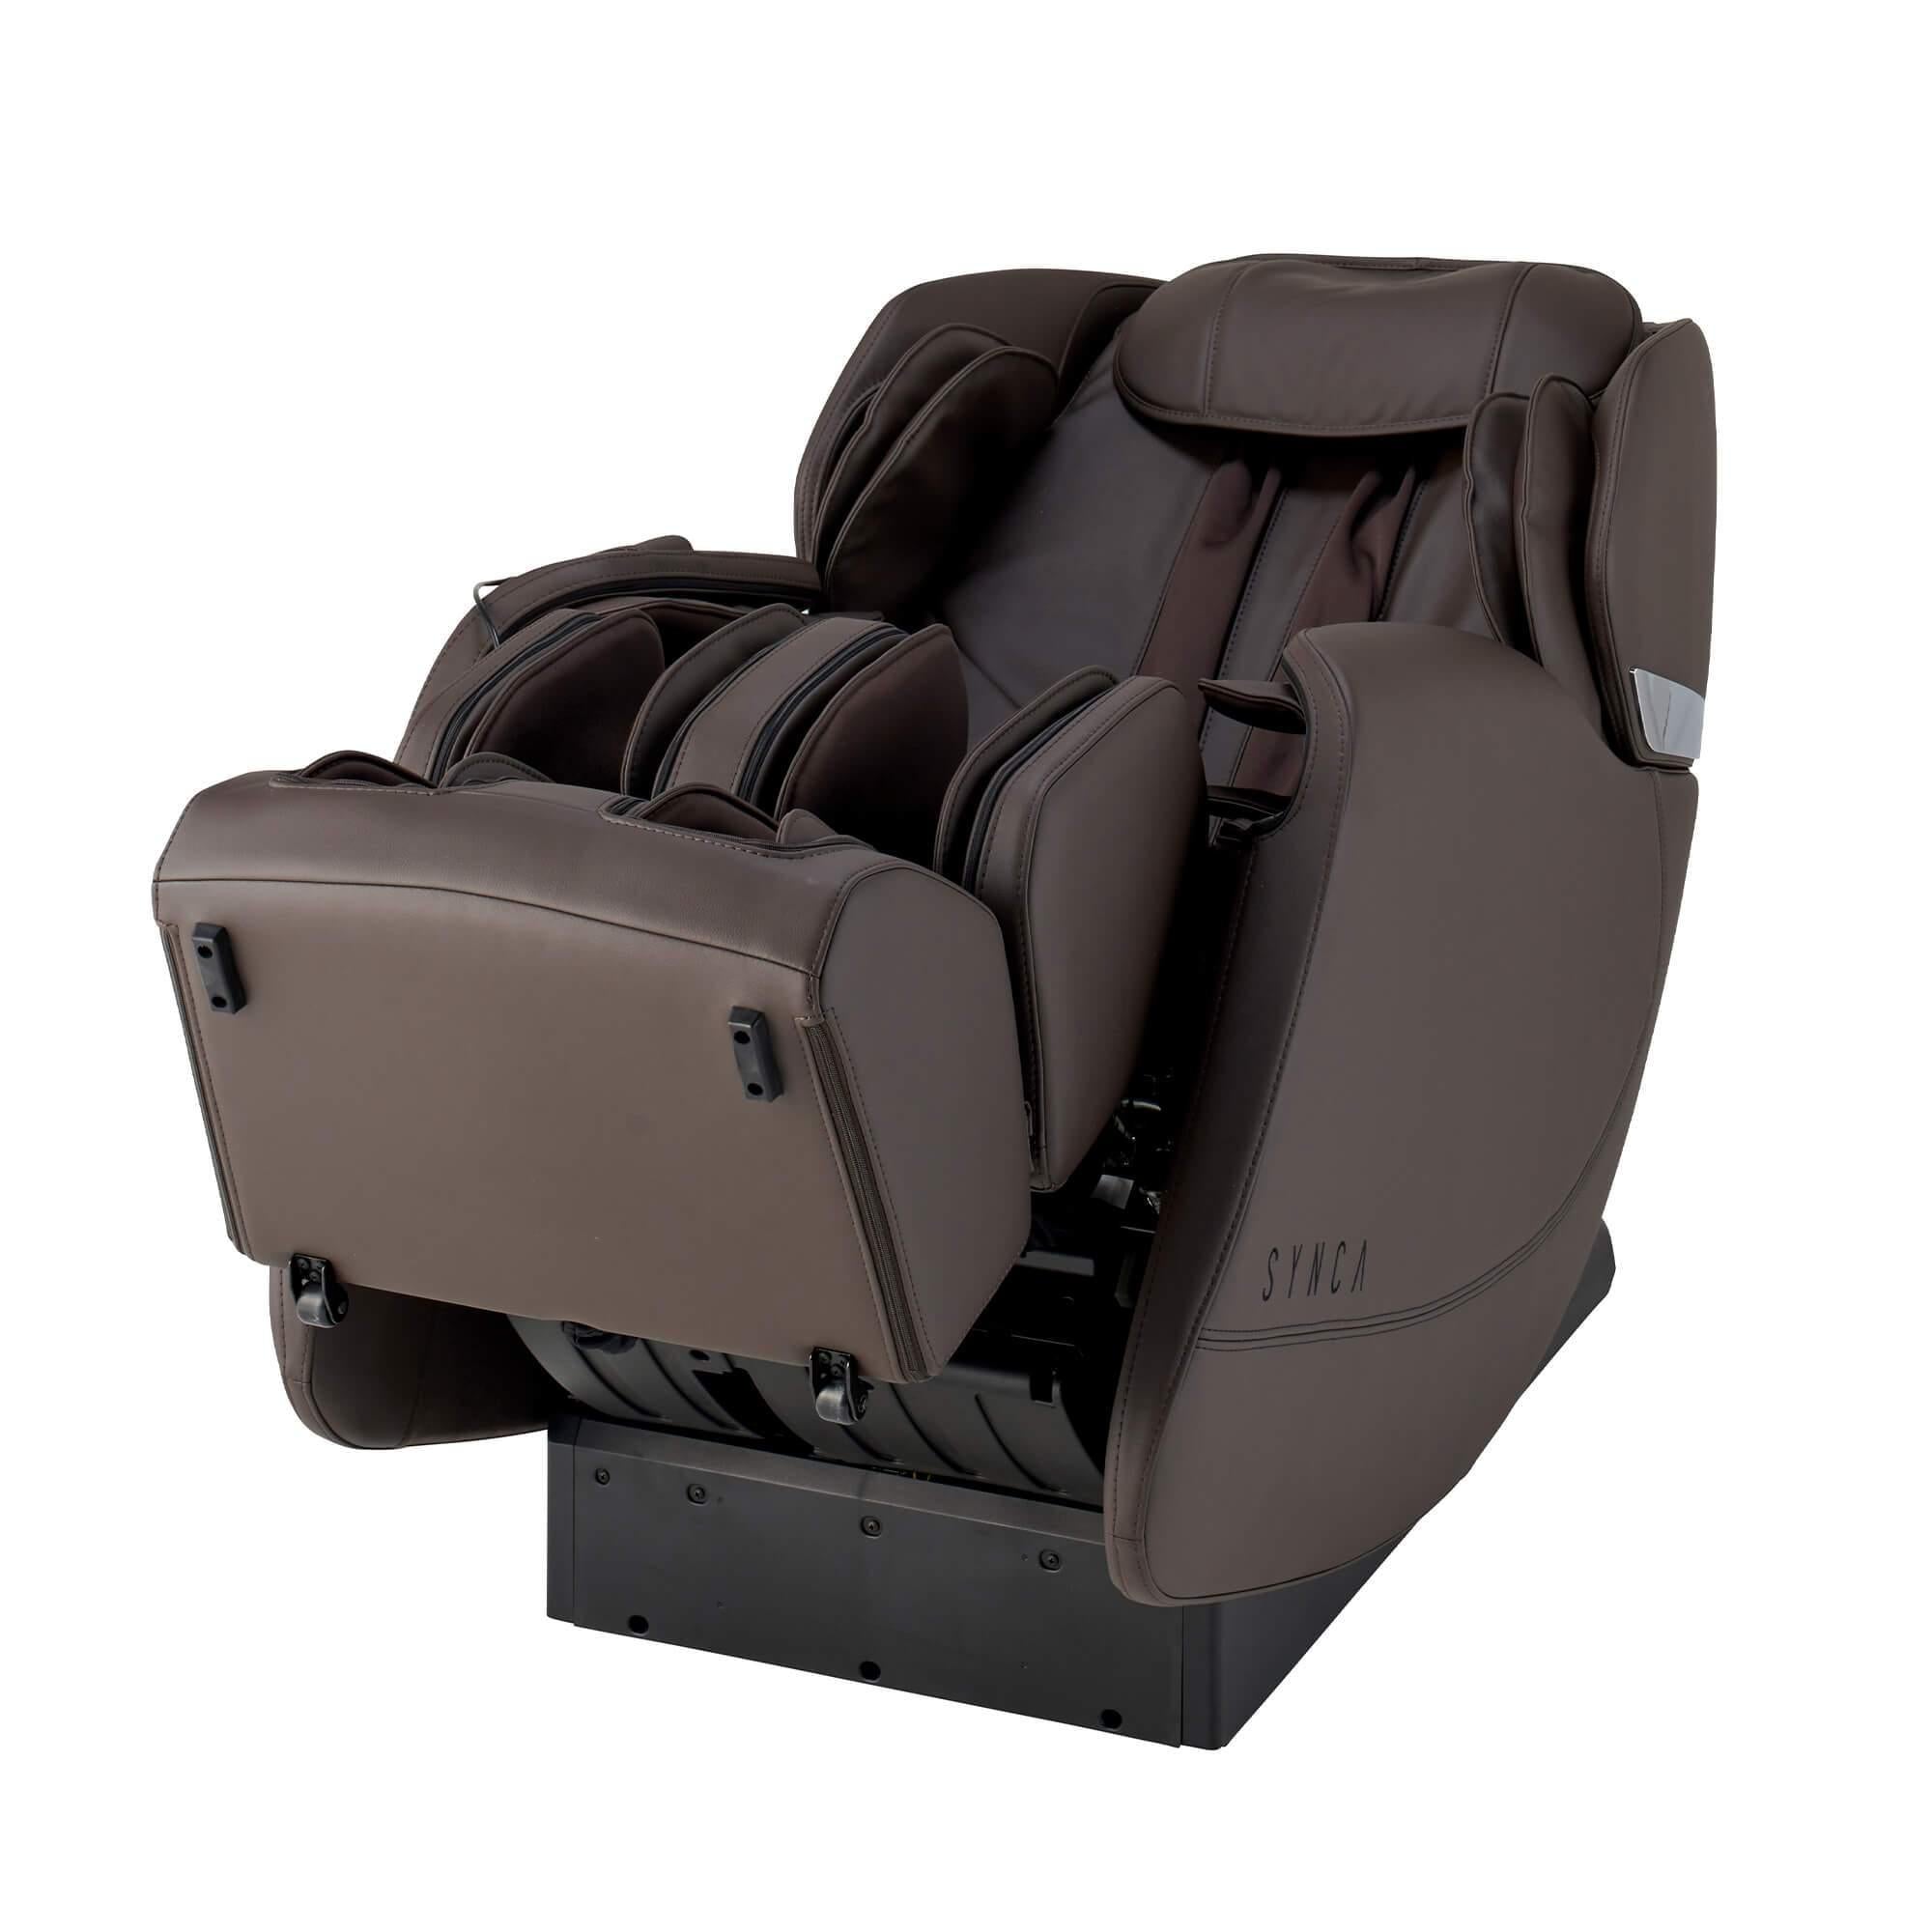 Synca Hisho SL Track Heated Deluxe Zero Gravity Massage Chair